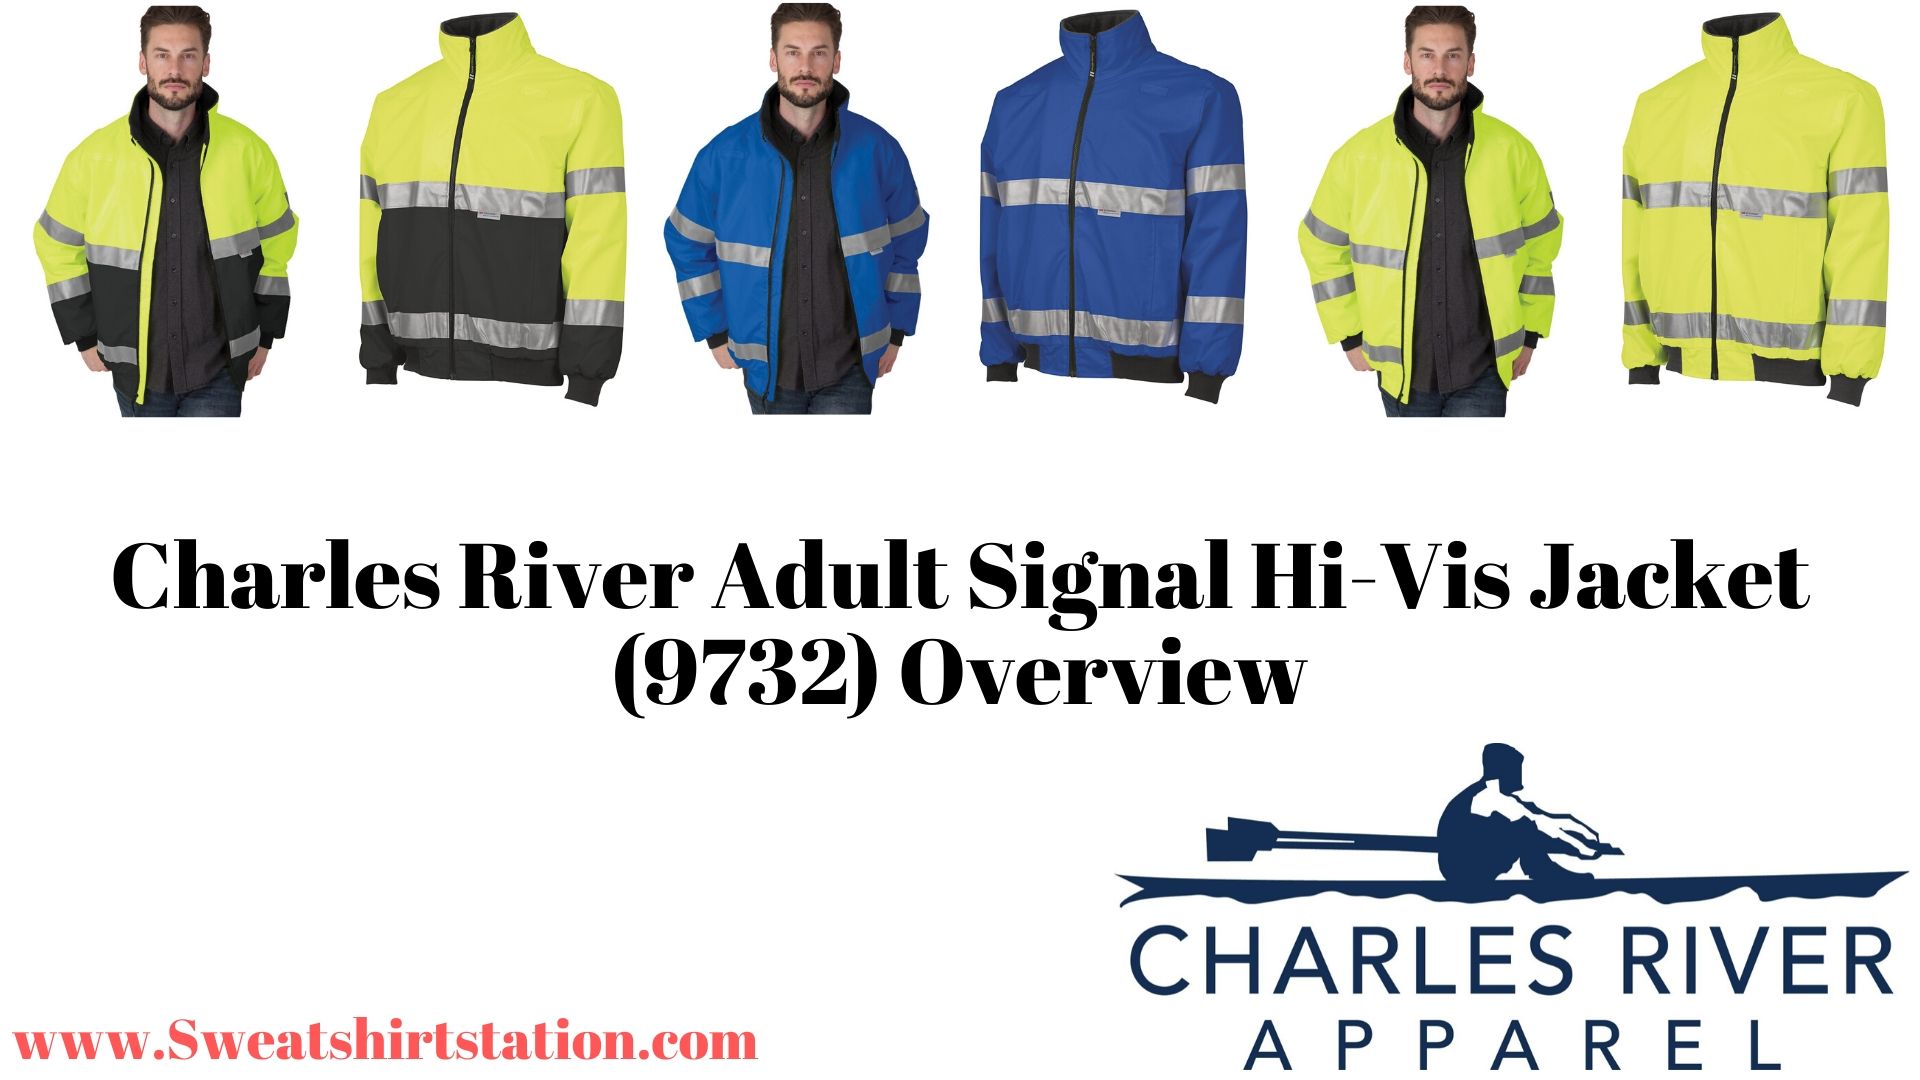 Charles River Adult Signal Hi-Vis Jacket (9732) Styles